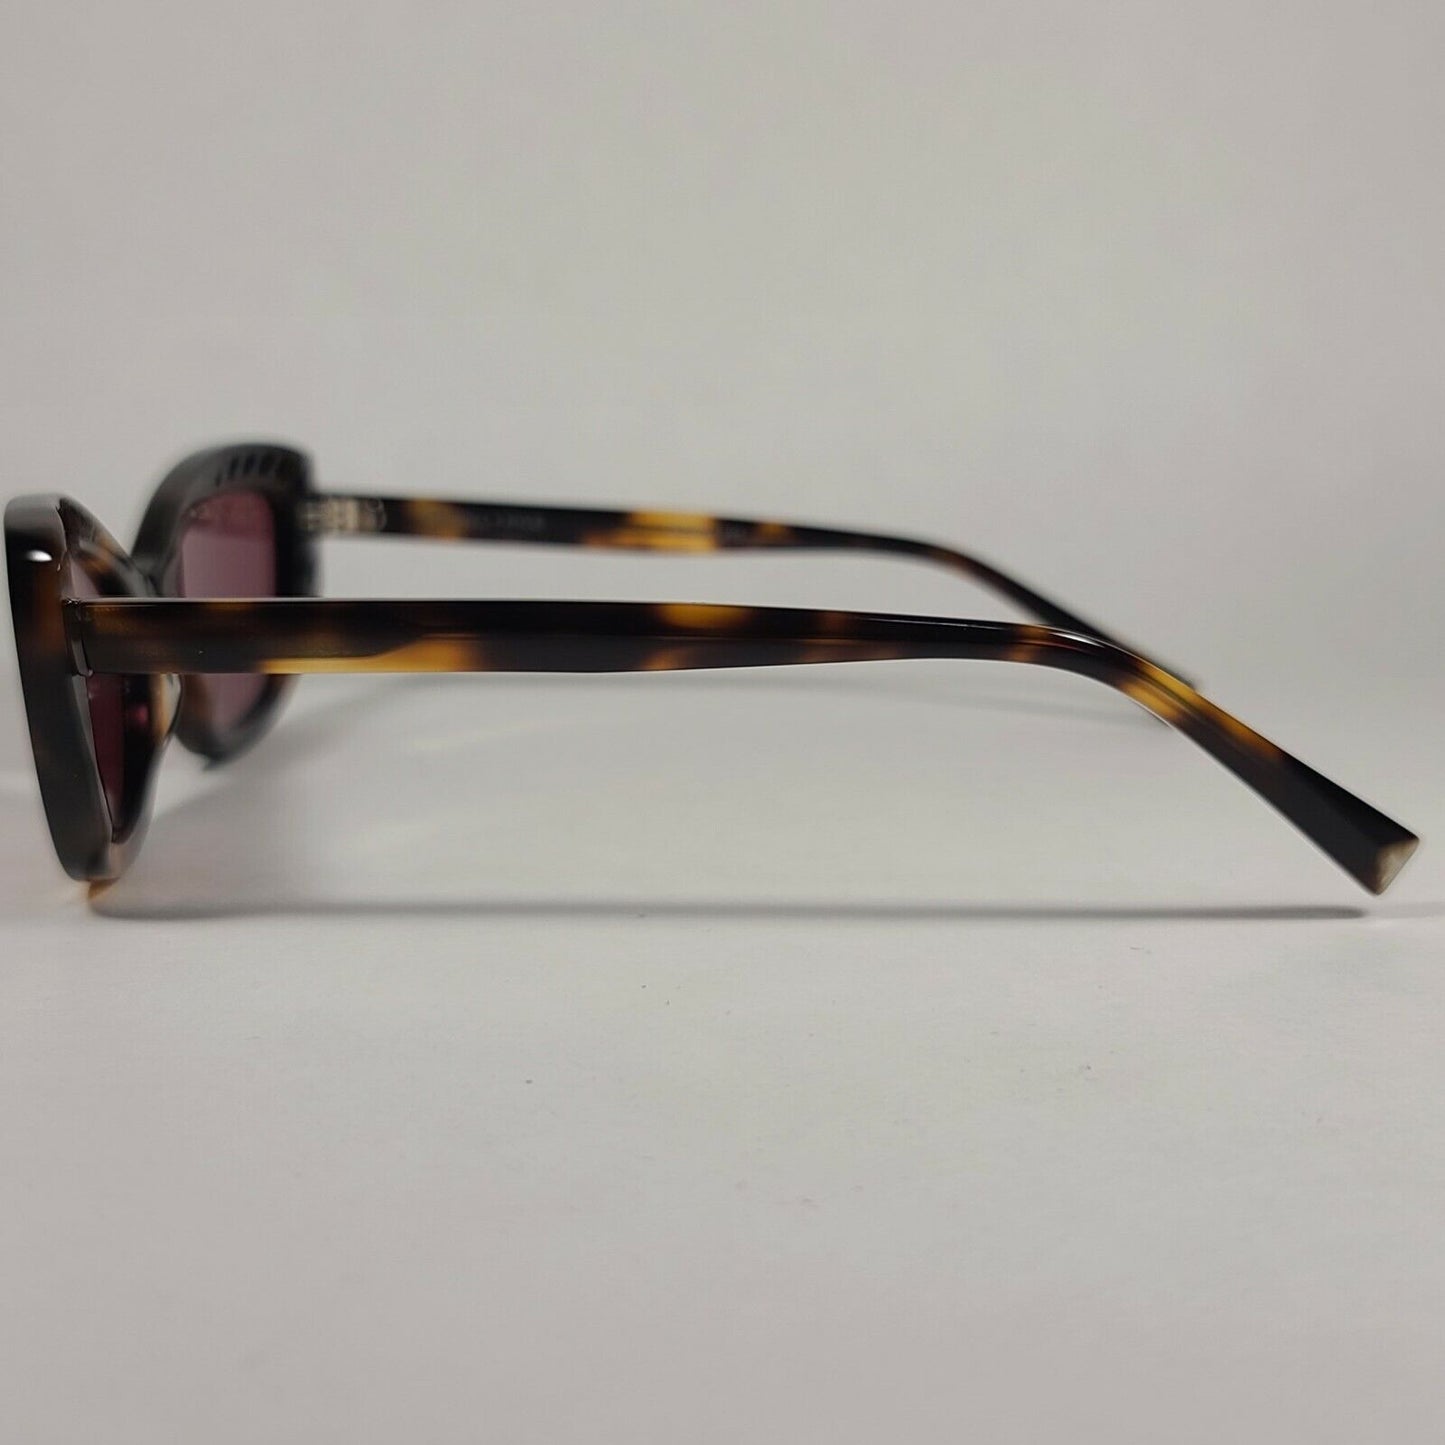 Kendall & Kylie KK5024D-215 00mm New Sunglasses